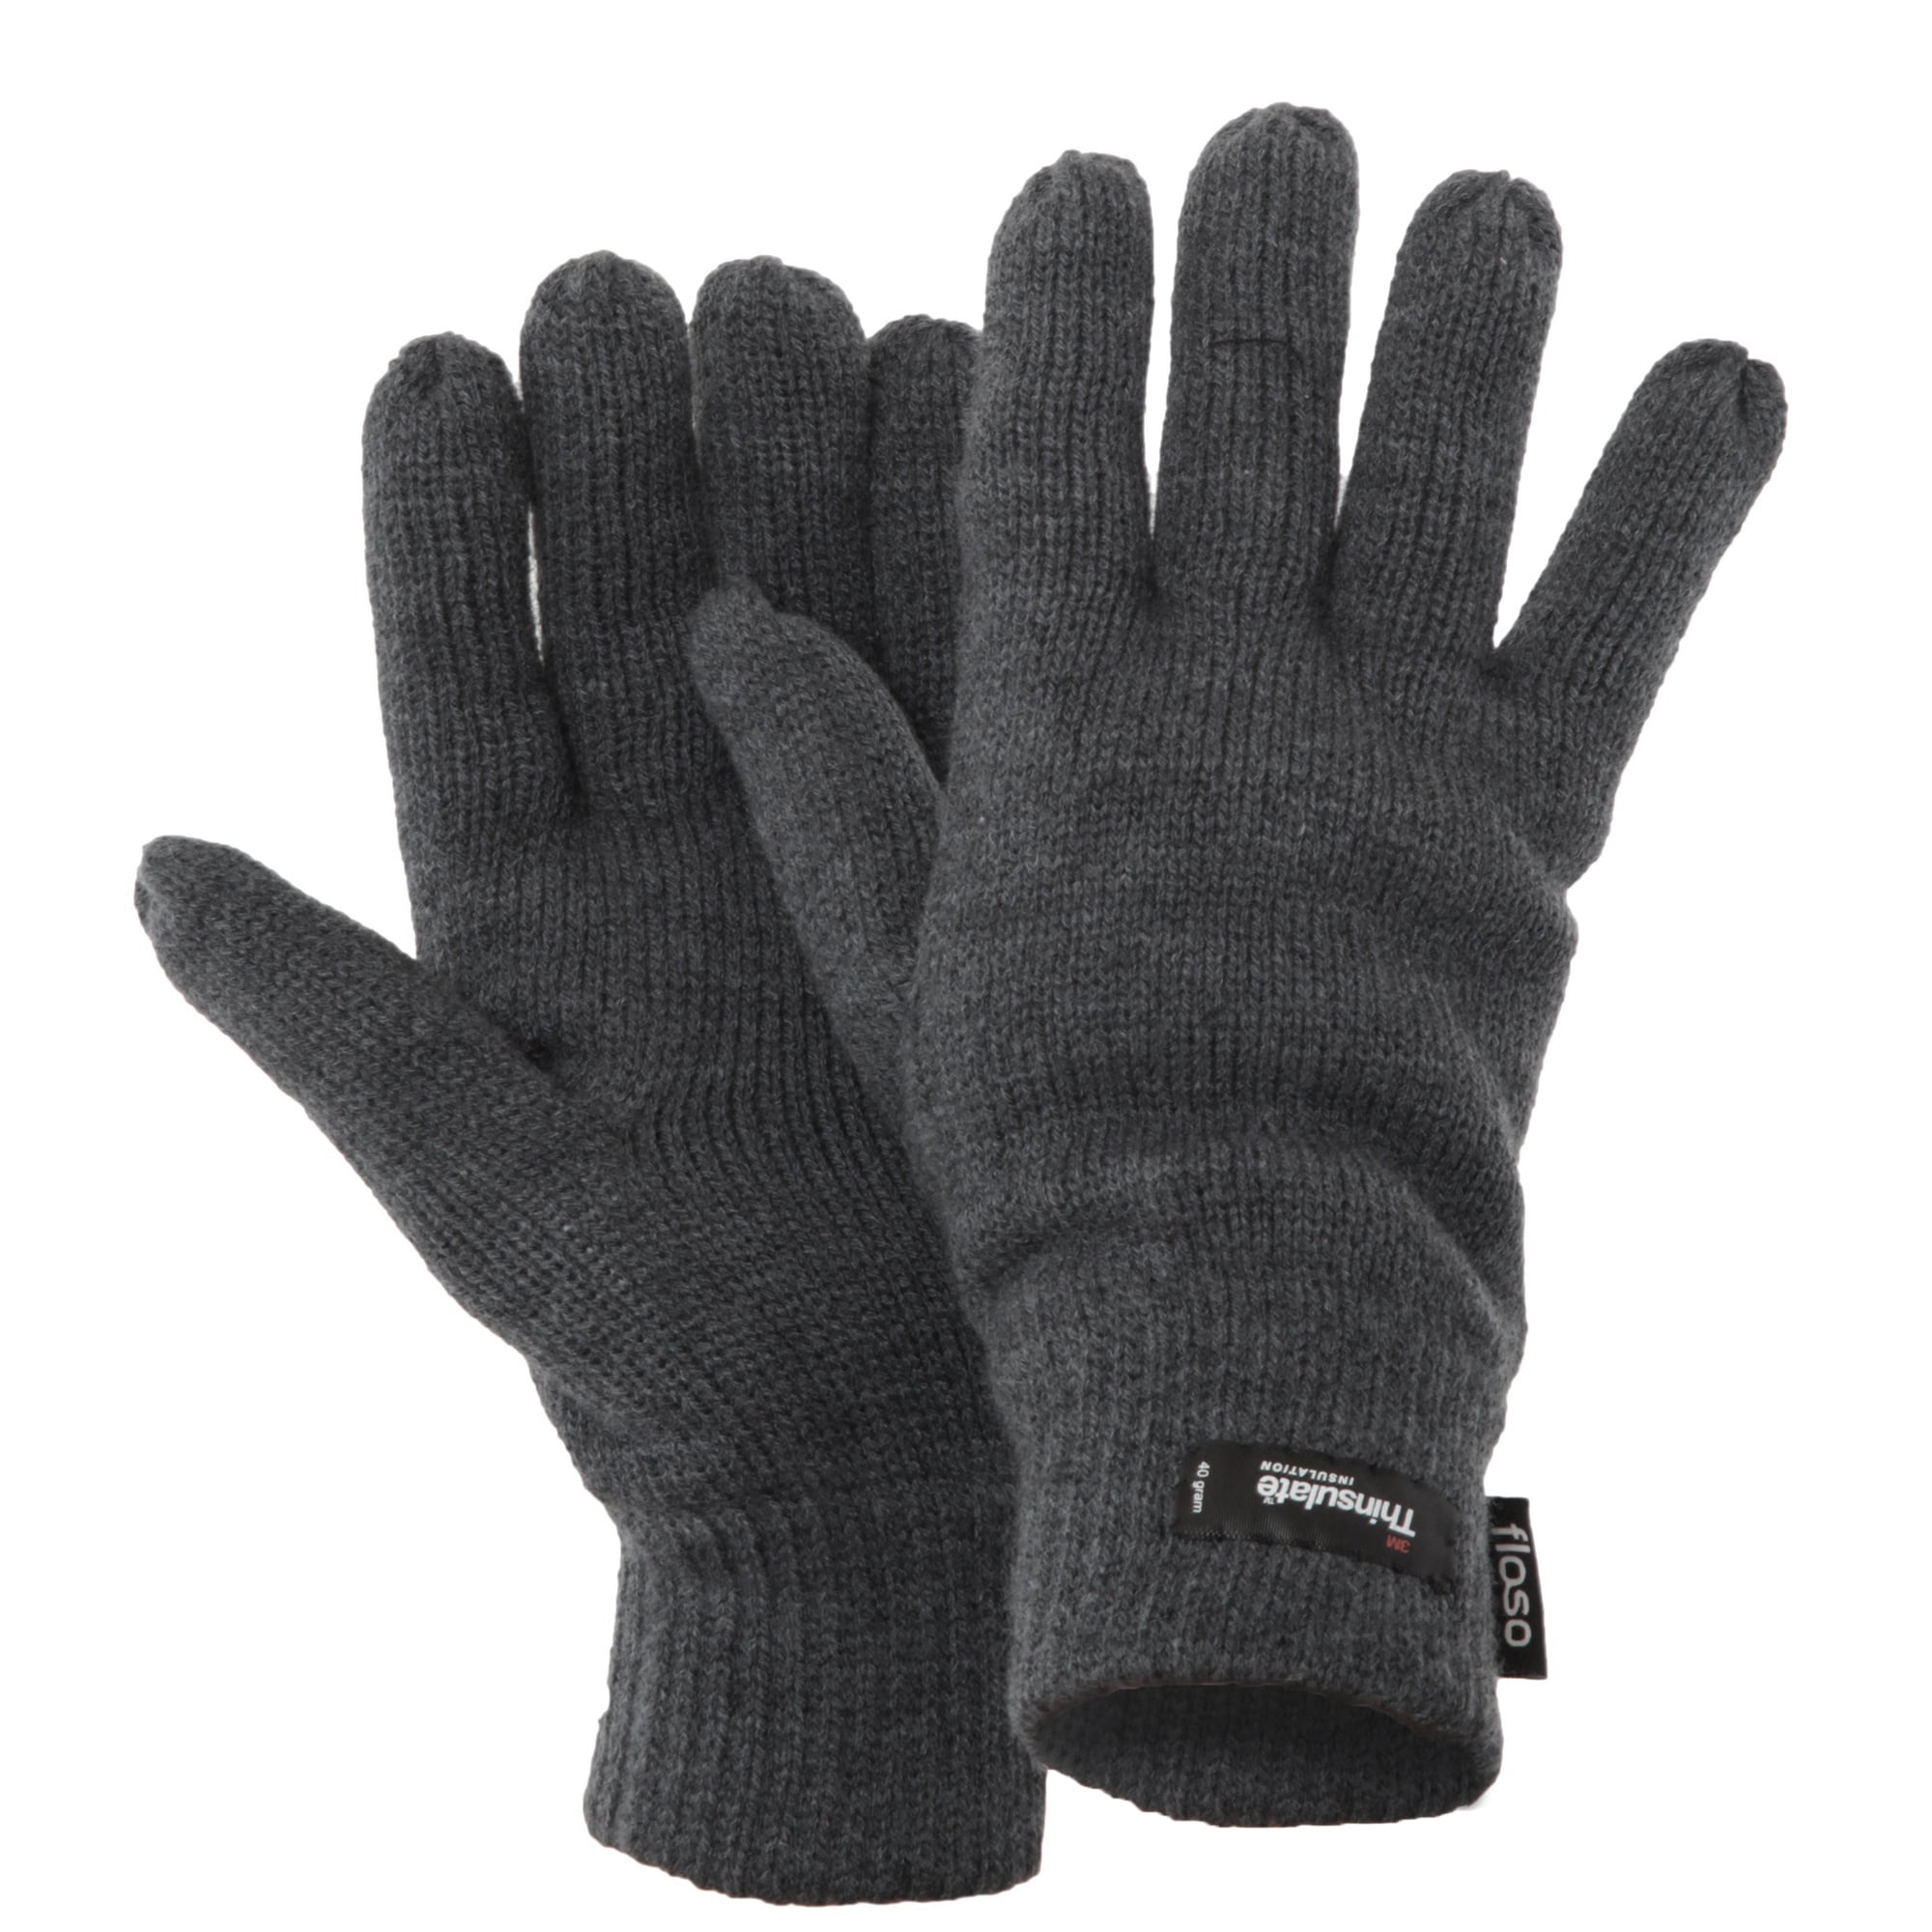 Highlander homme mitaines gants thinsulate doublure thermique noir m/l 